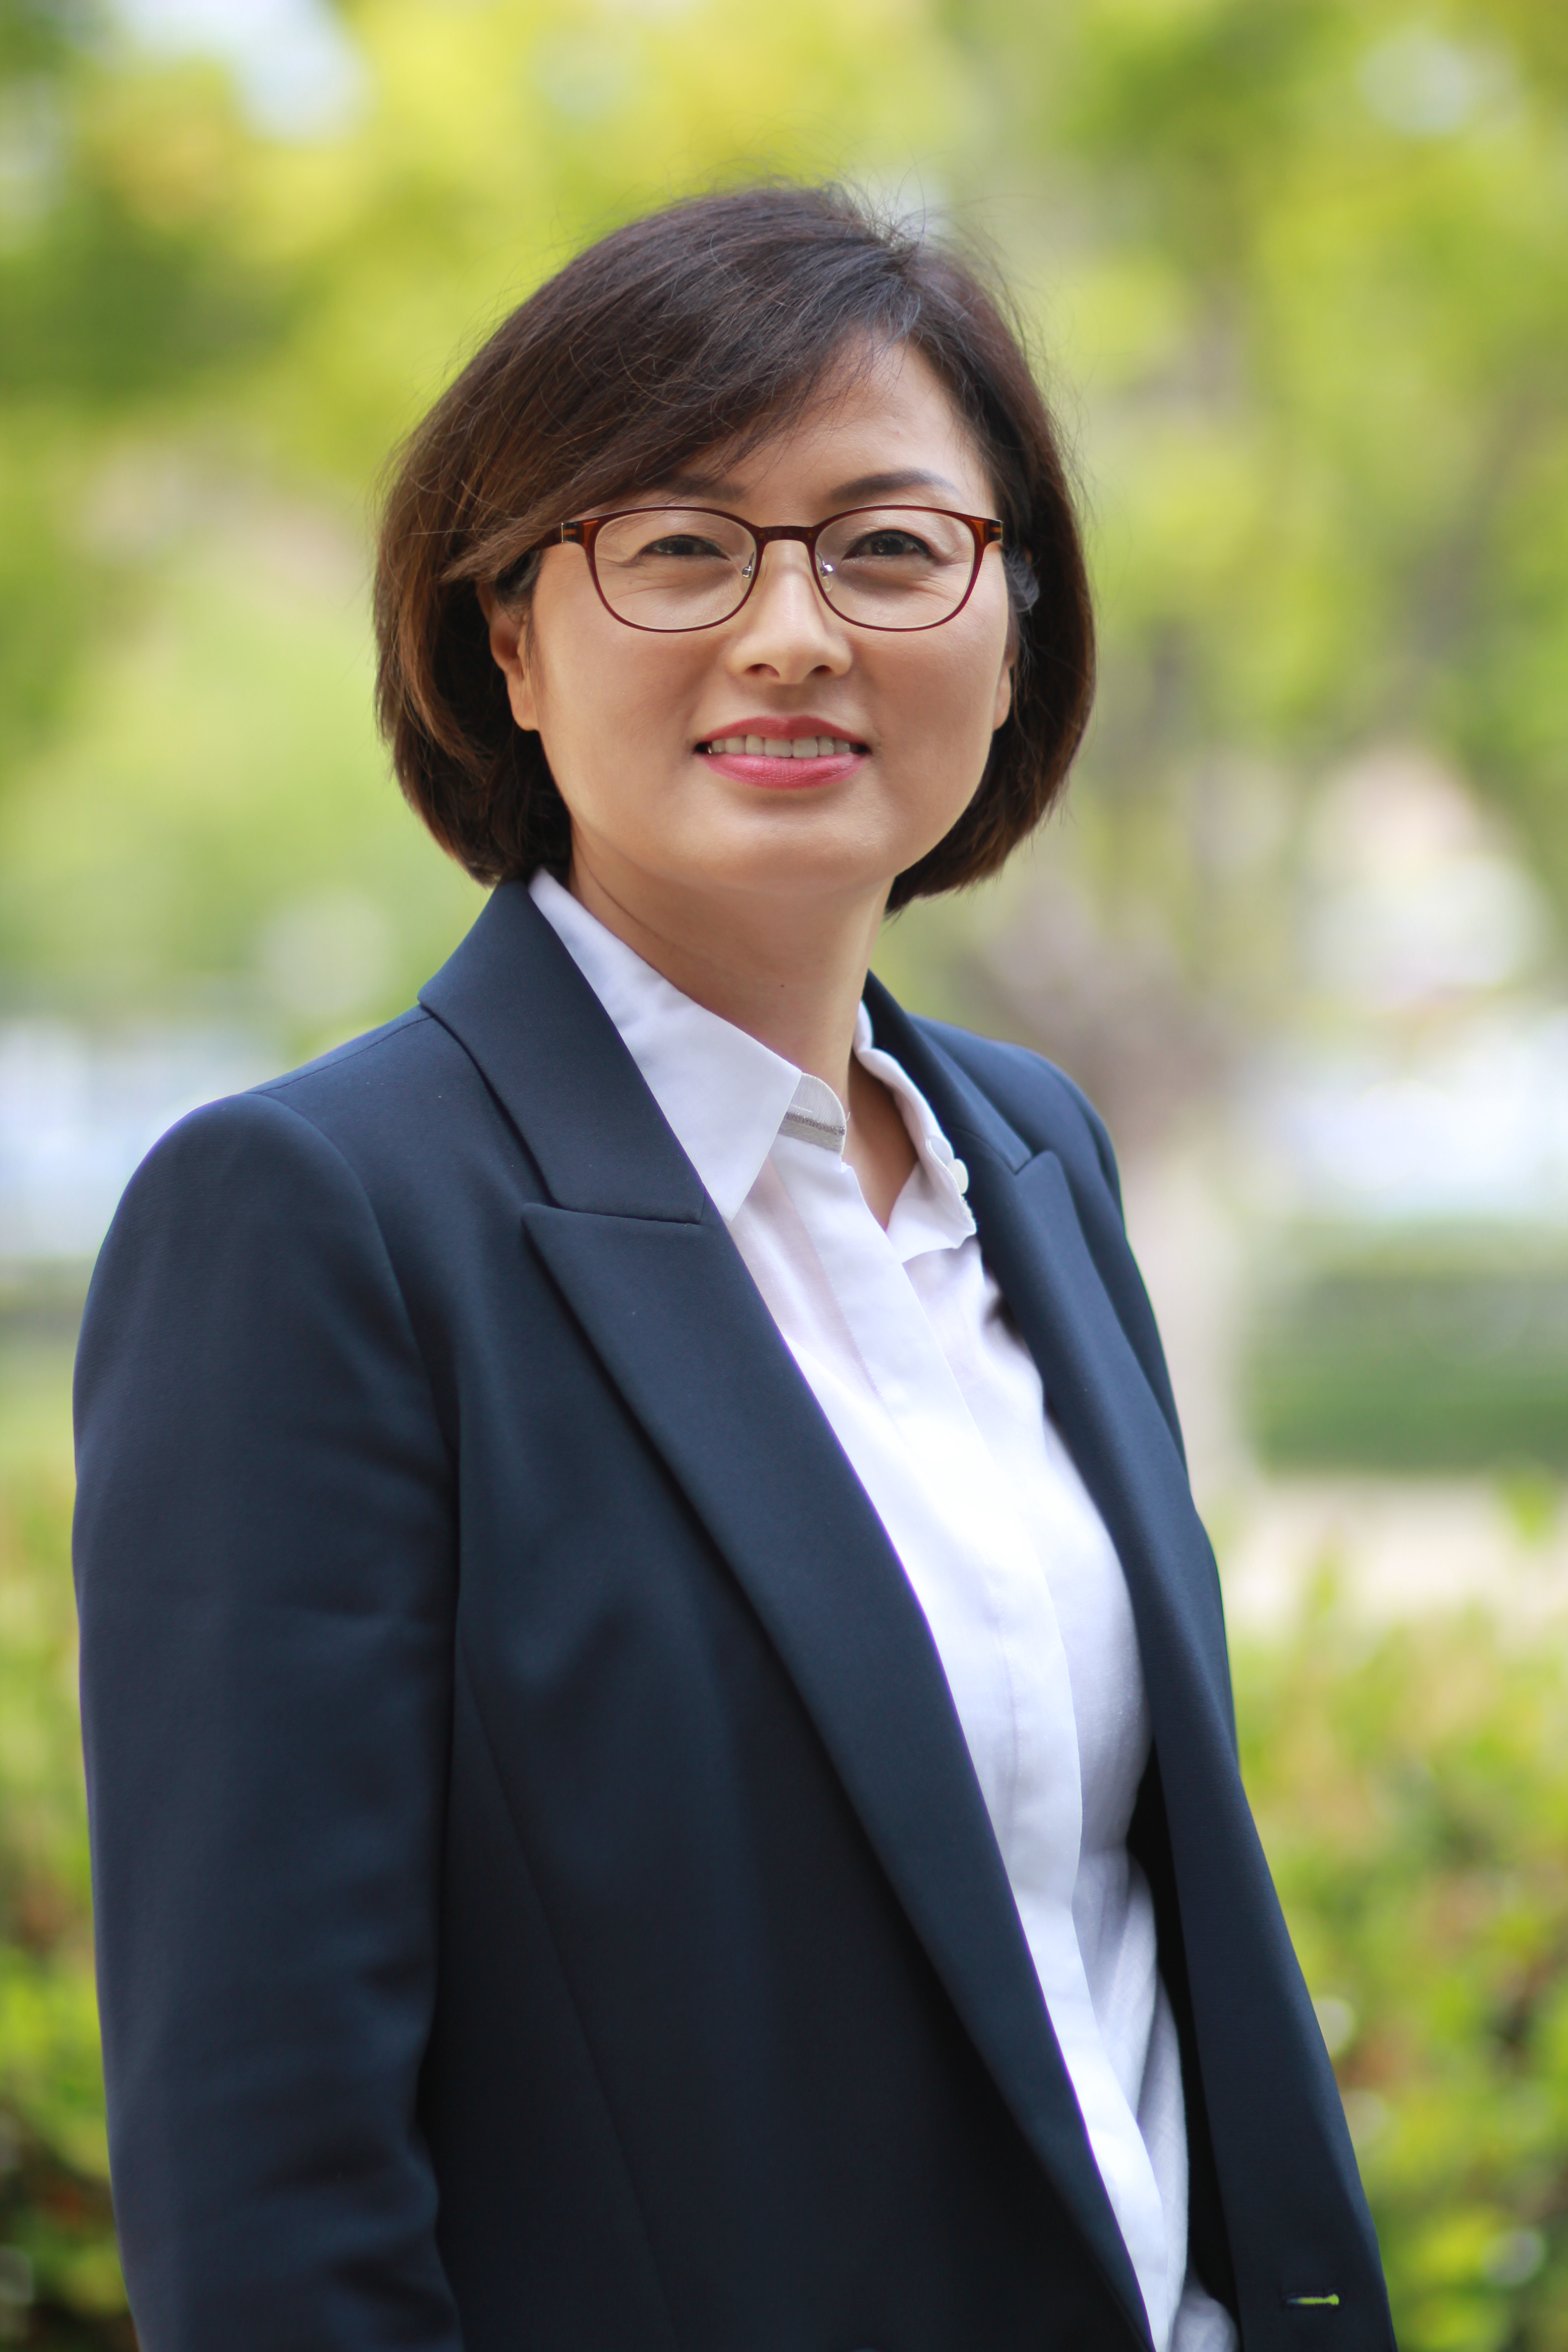 Dr. Young-Suk Kim